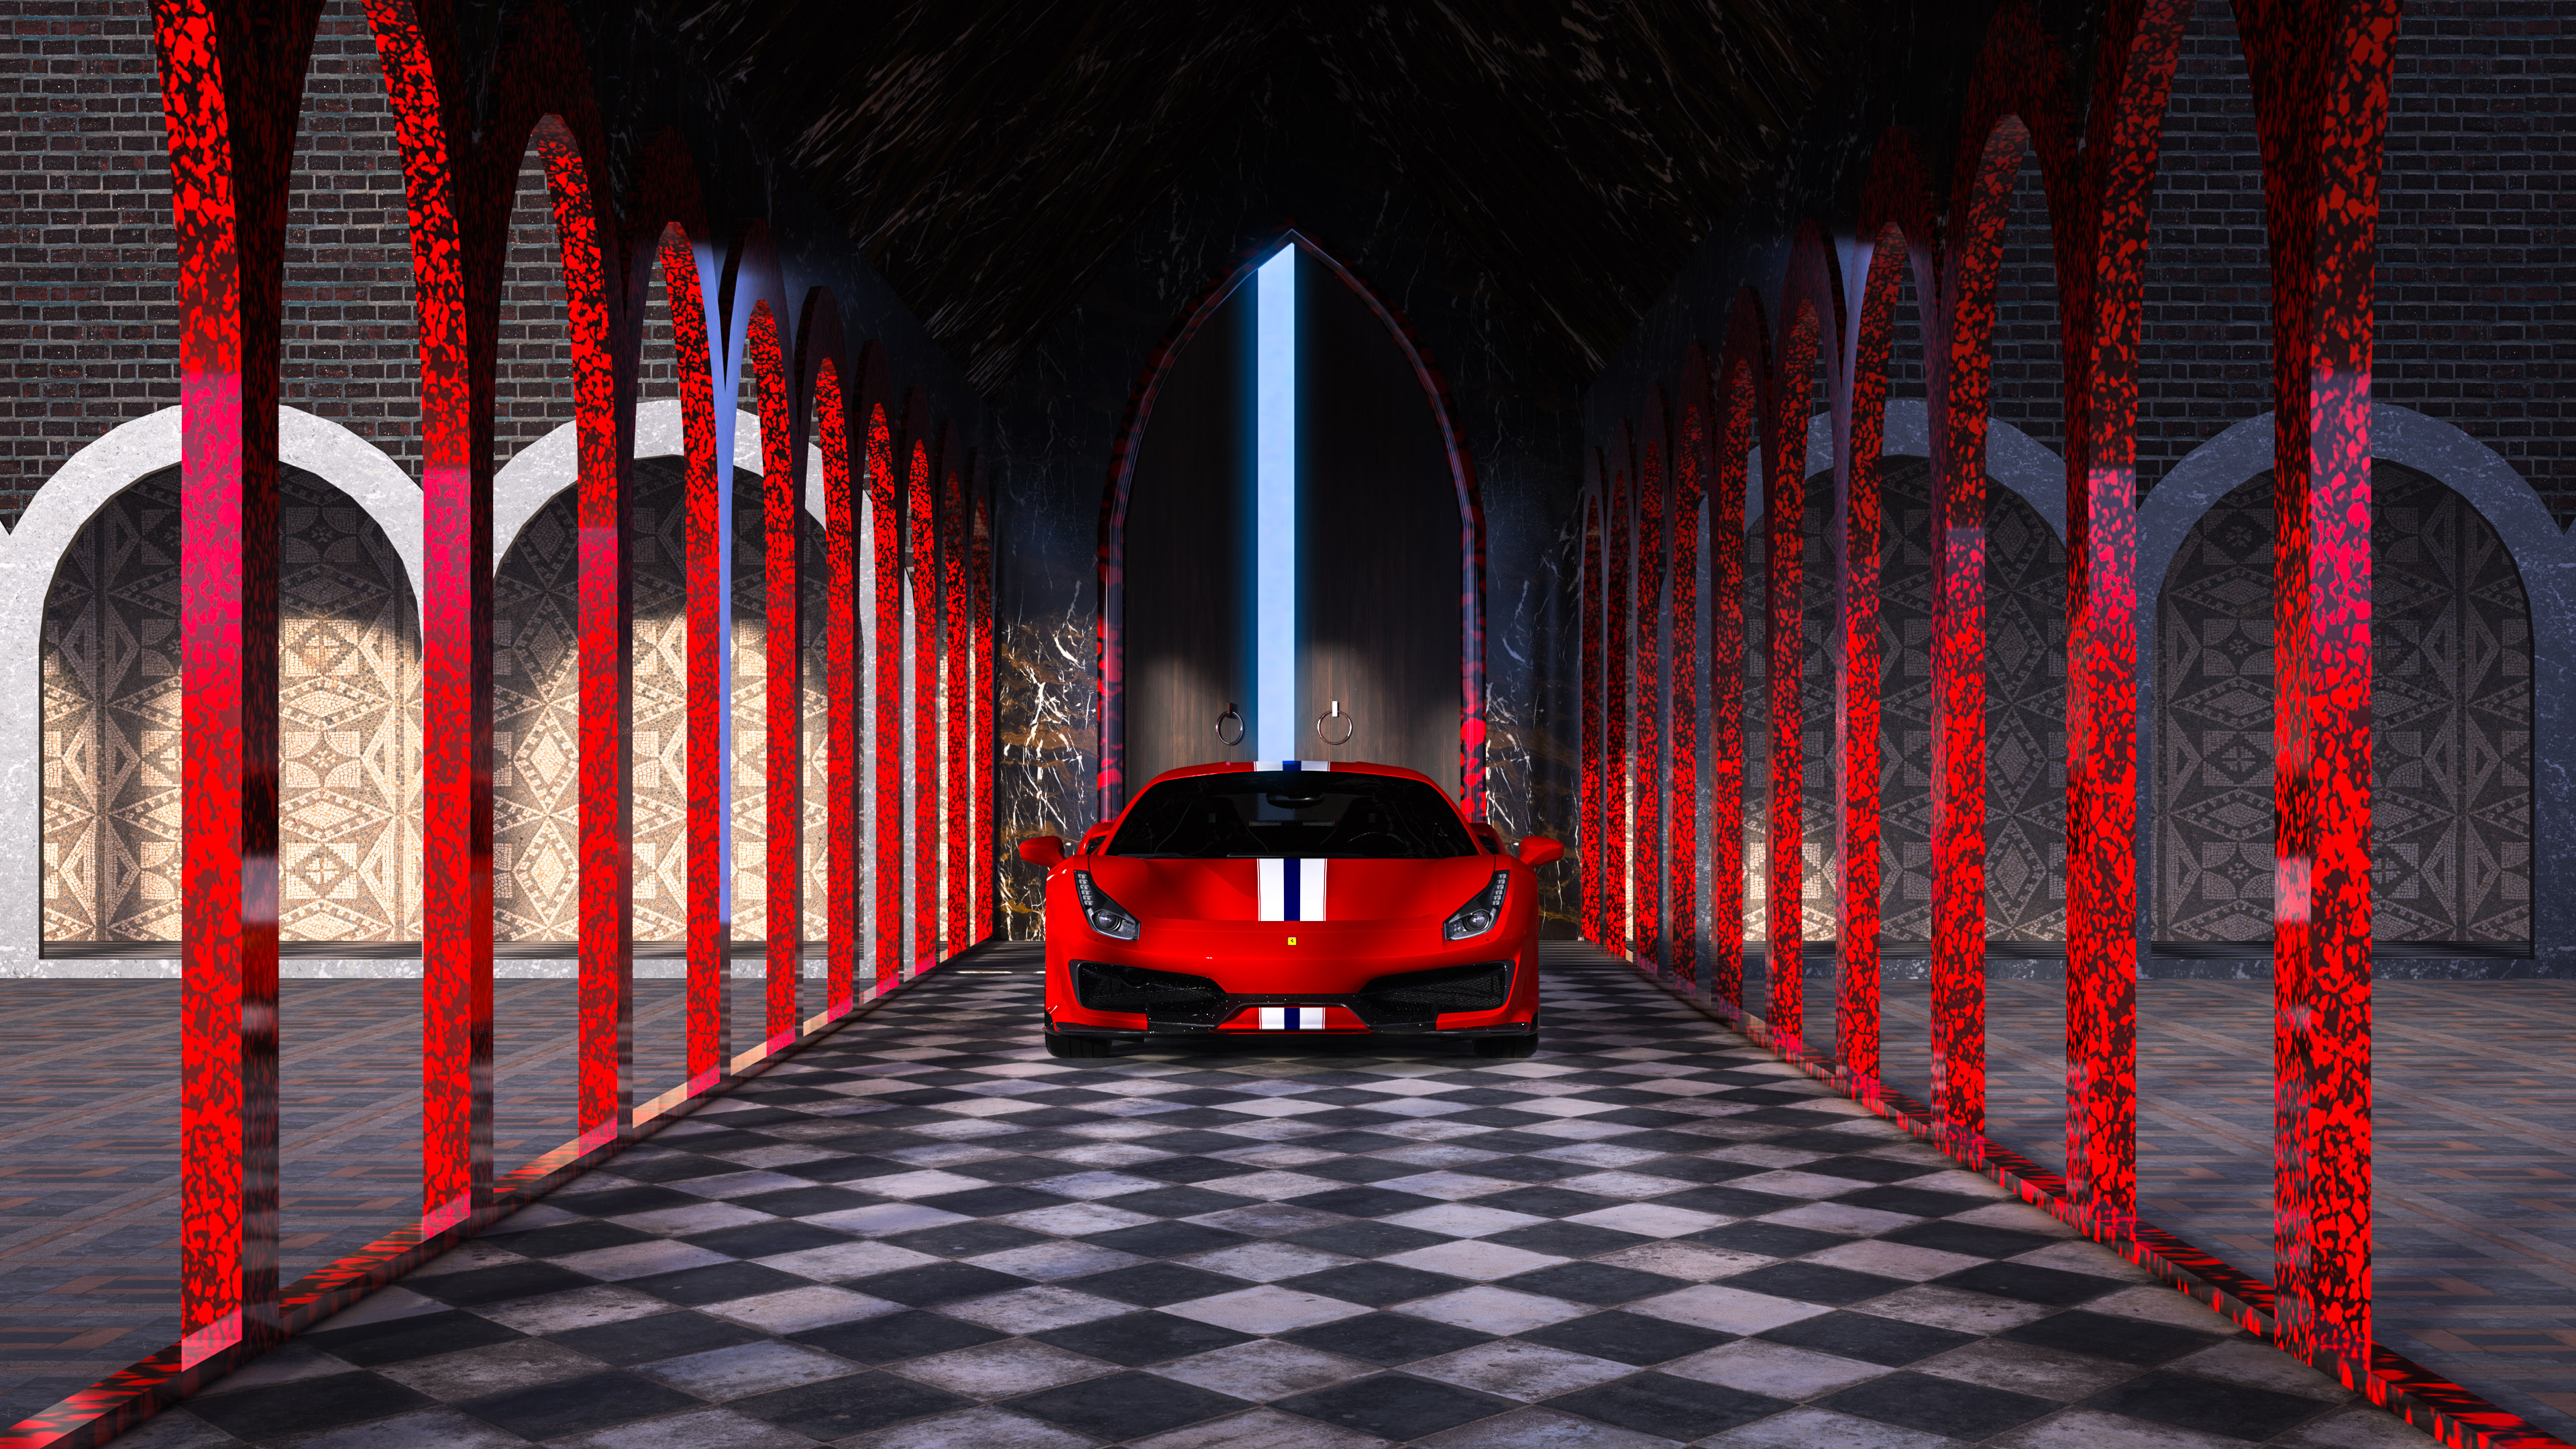 free 3D wallpaper of Ferrari car in 4K Ultra HD resolution